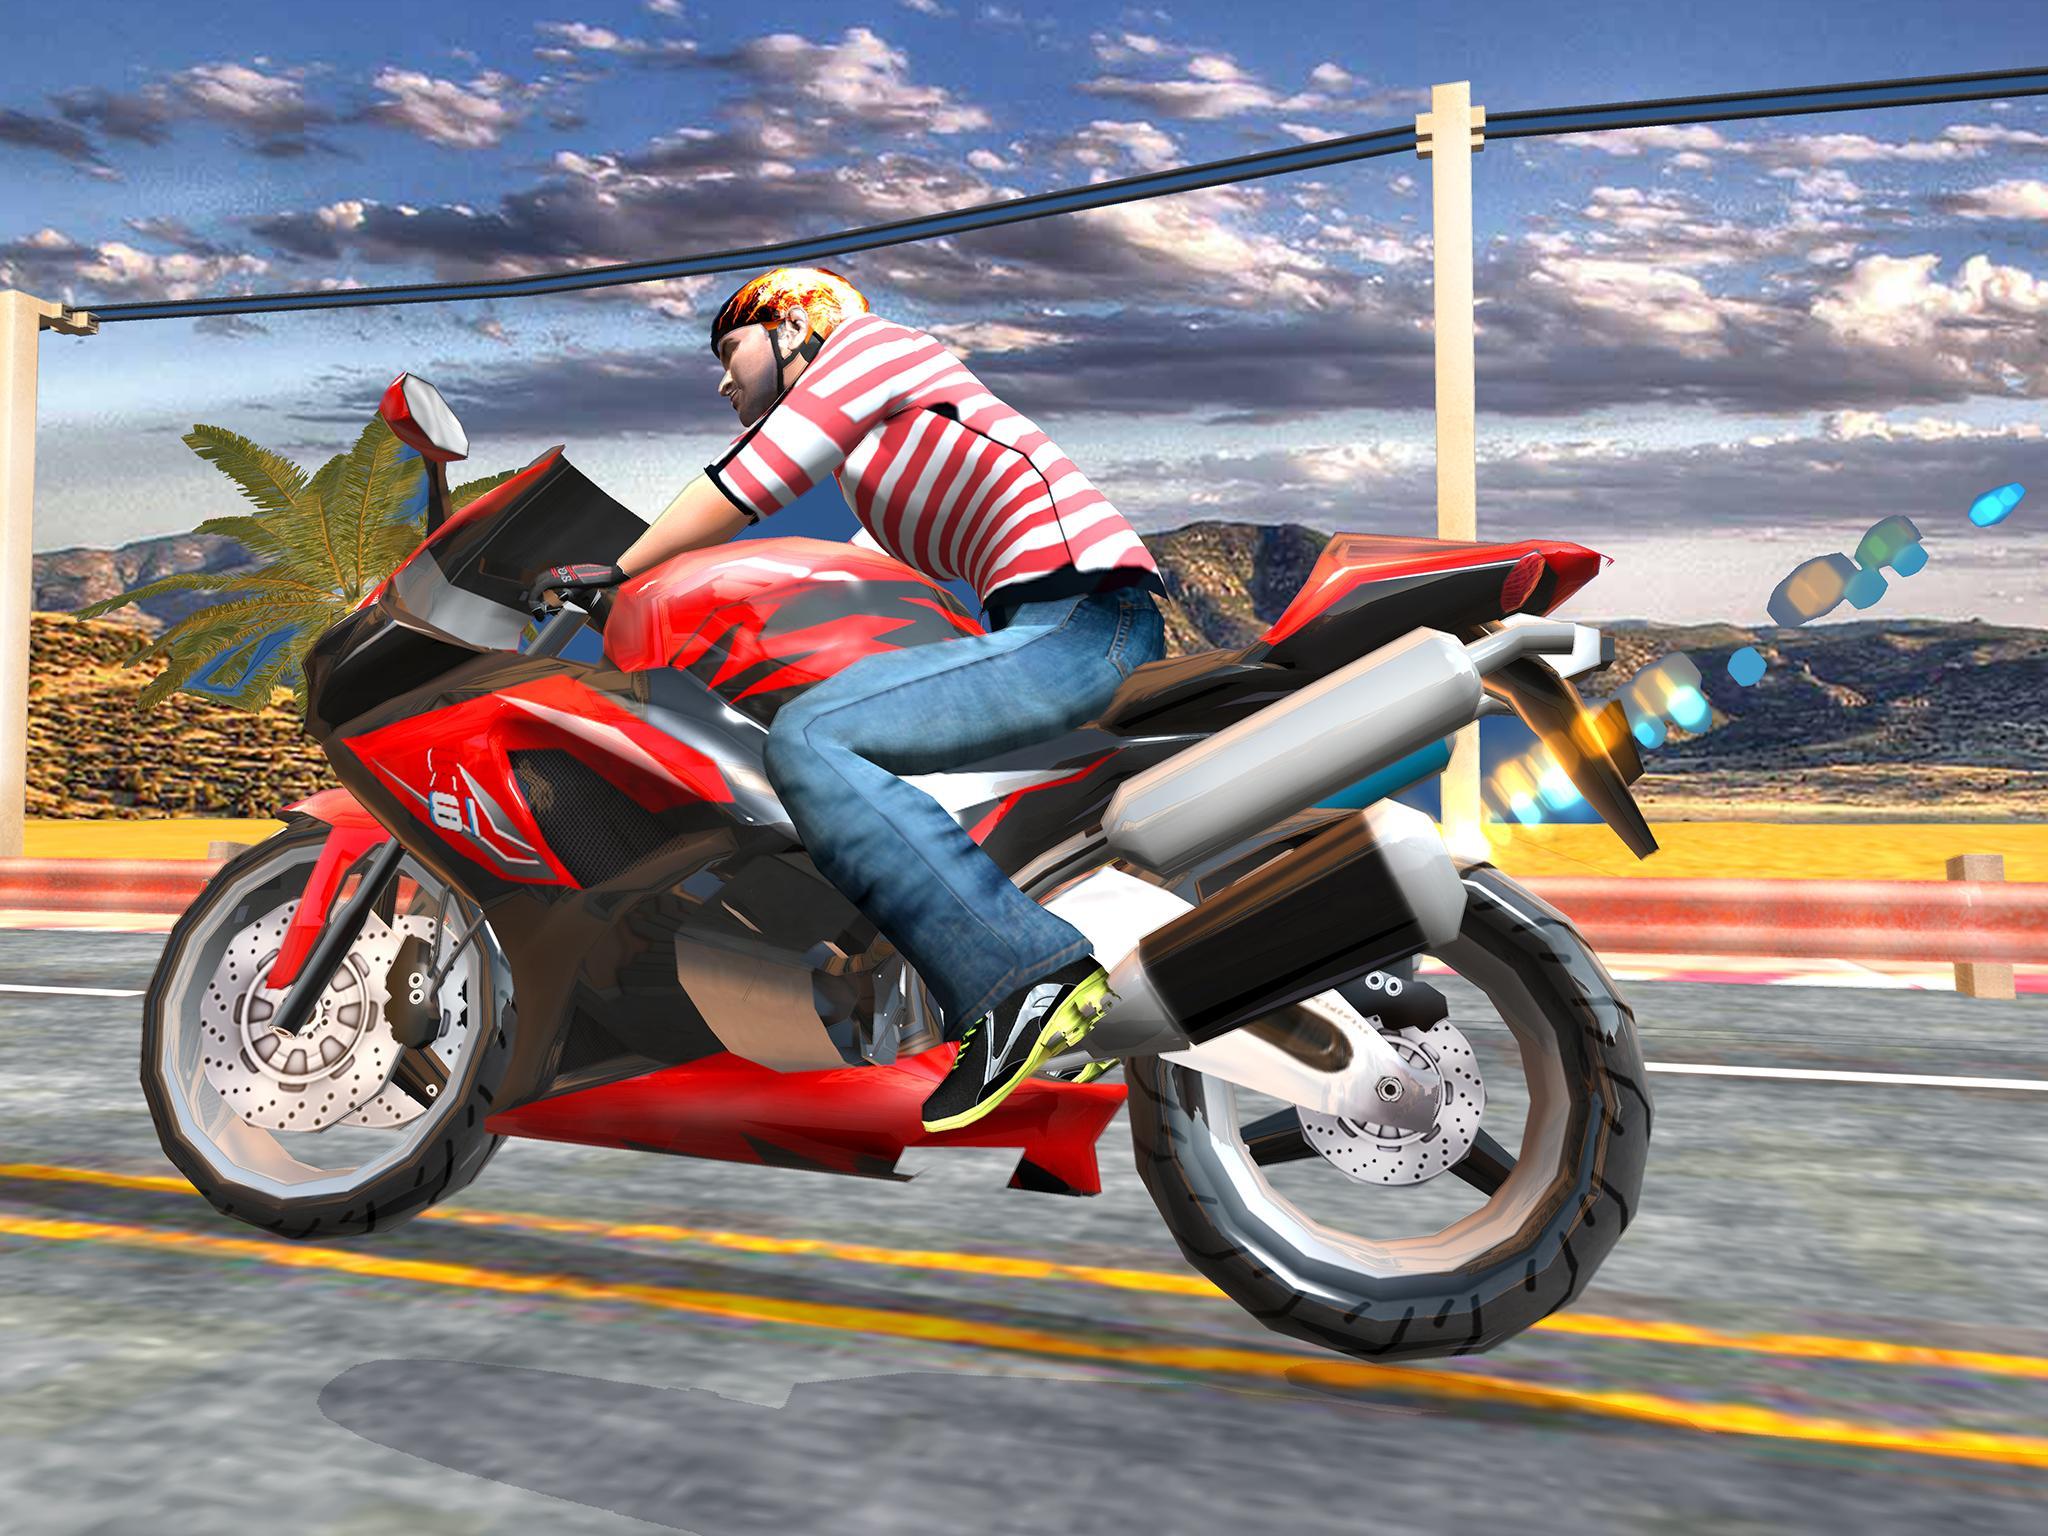 Traffic bike. Игры про мотоциклы с пассажир. Аватарка для игры мотоцикл. Гугл реклама мотоцикл игра.